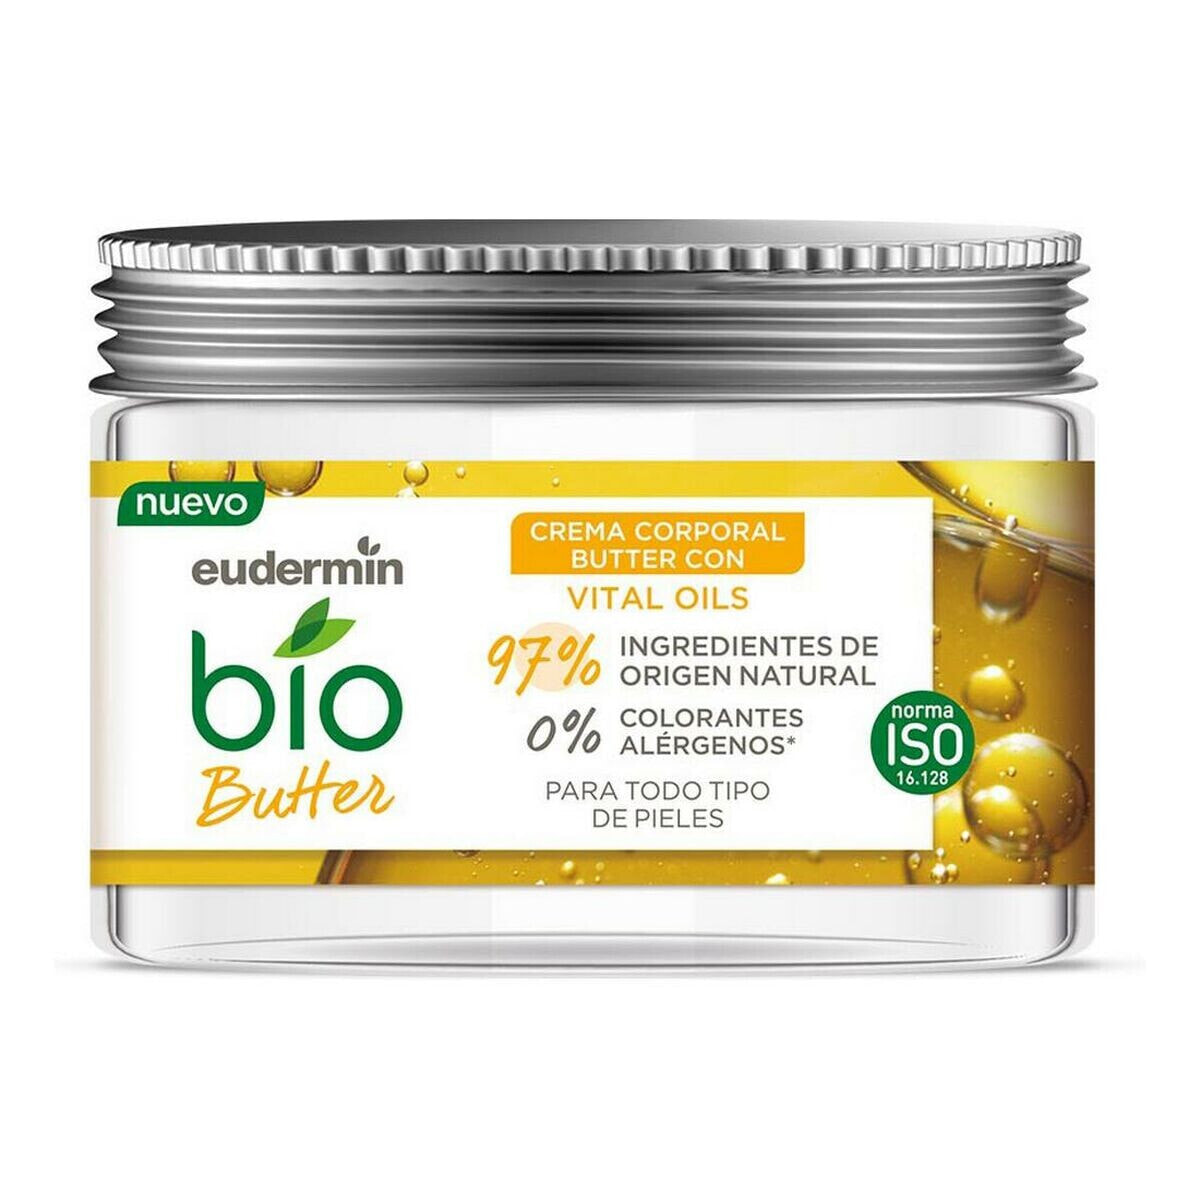 Увлажняющий крем для тела Bio Butter Vital Oils Eudermin (300 ml)